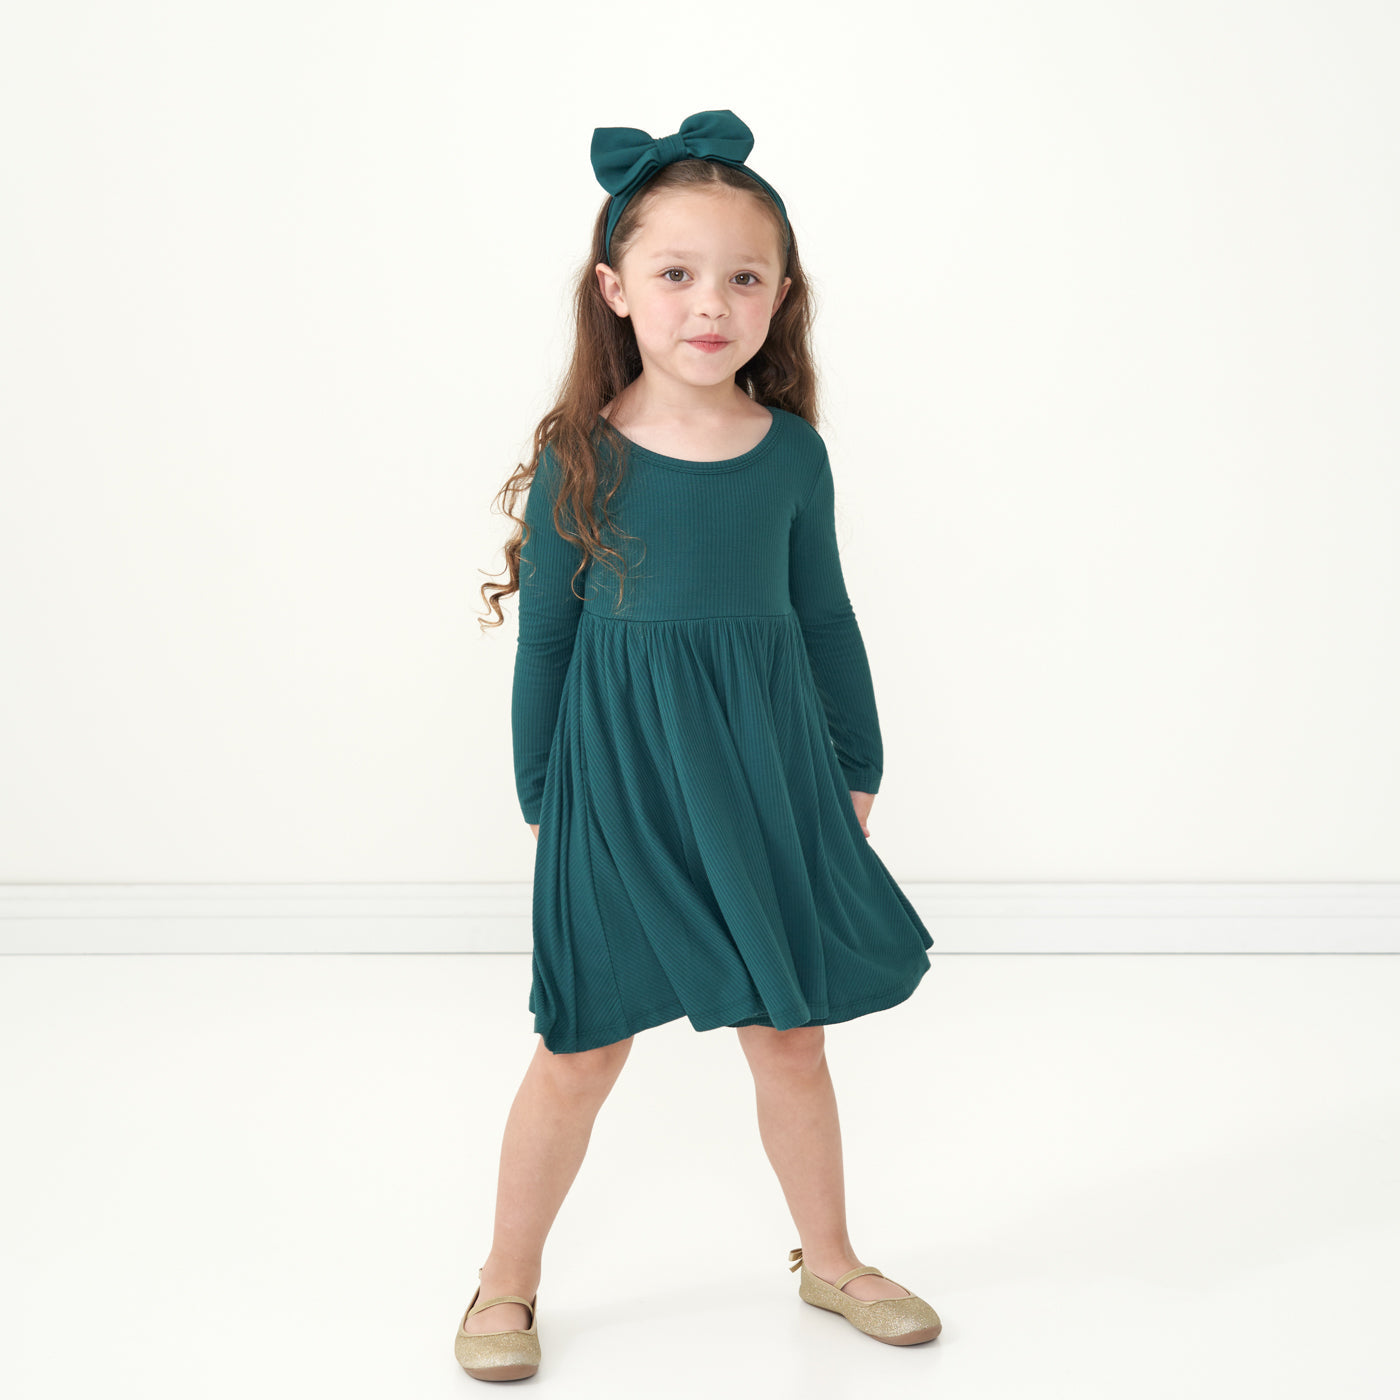 Play Dress Twirl - Emerald Ribbed Twirl Dress